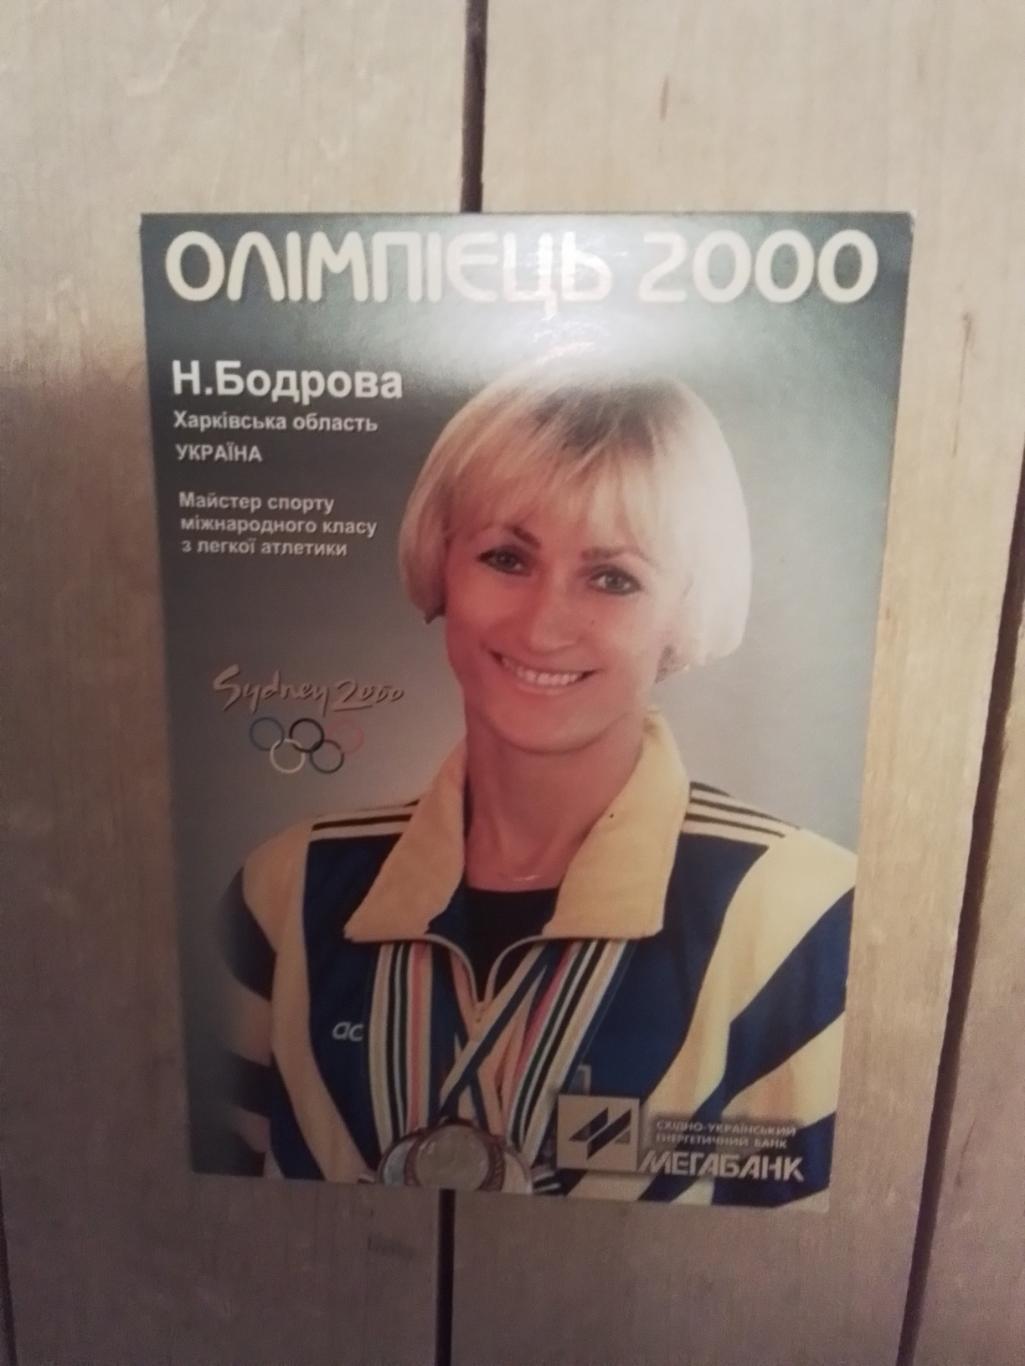 Календарик Олимпиец 2000 Харьков Надежда Бодрова - Коршунова Бег с барьерами